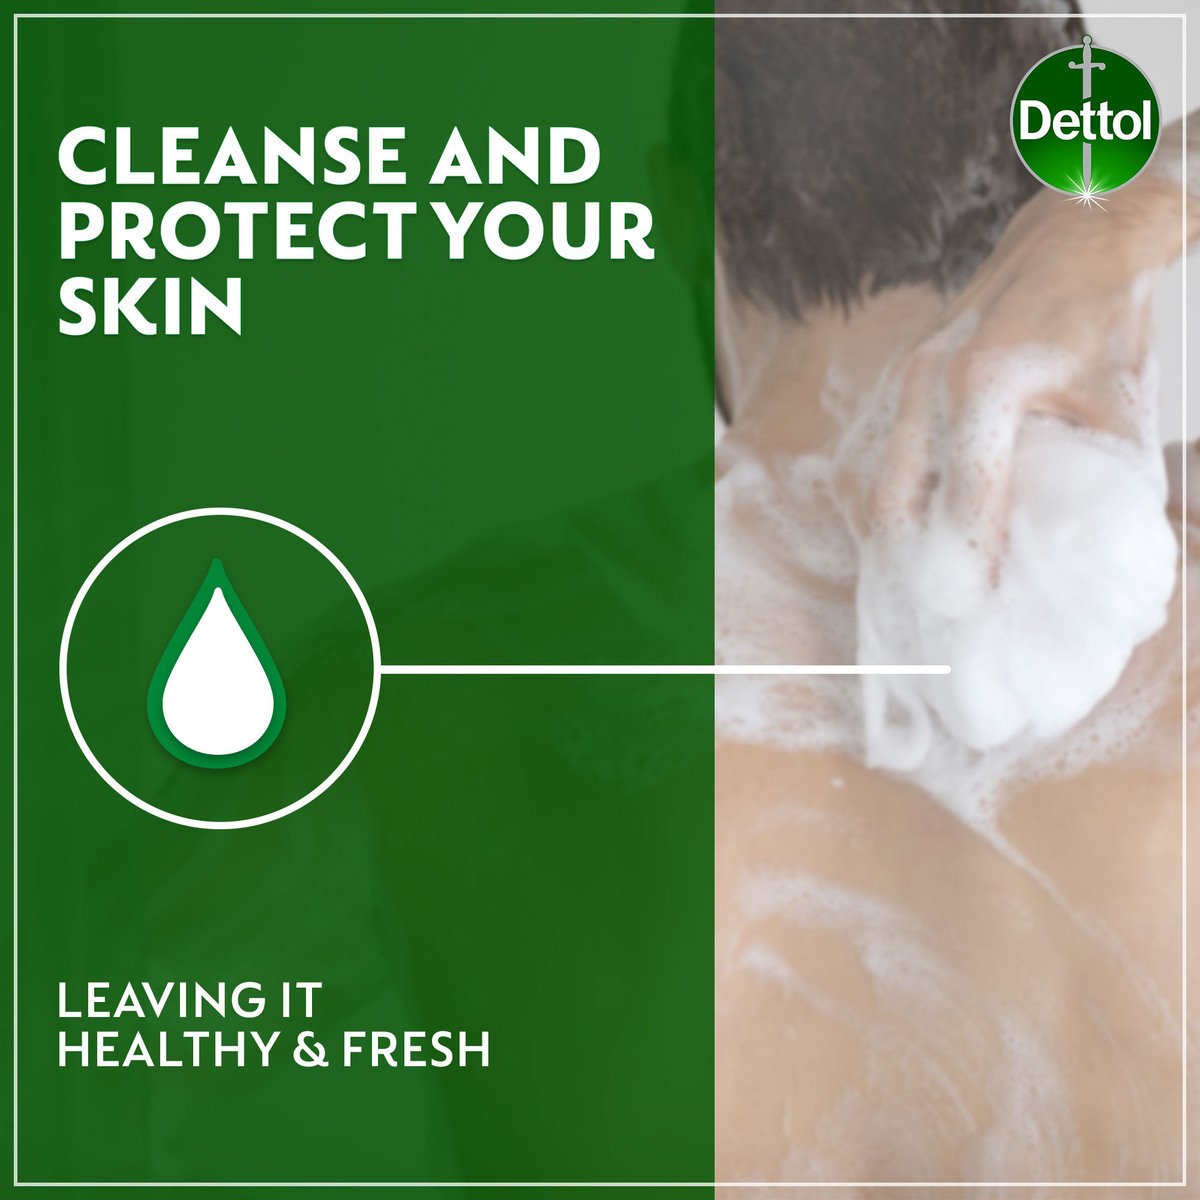 Dettol Skincare Anti-Bacterial Soap 4 x 165 g